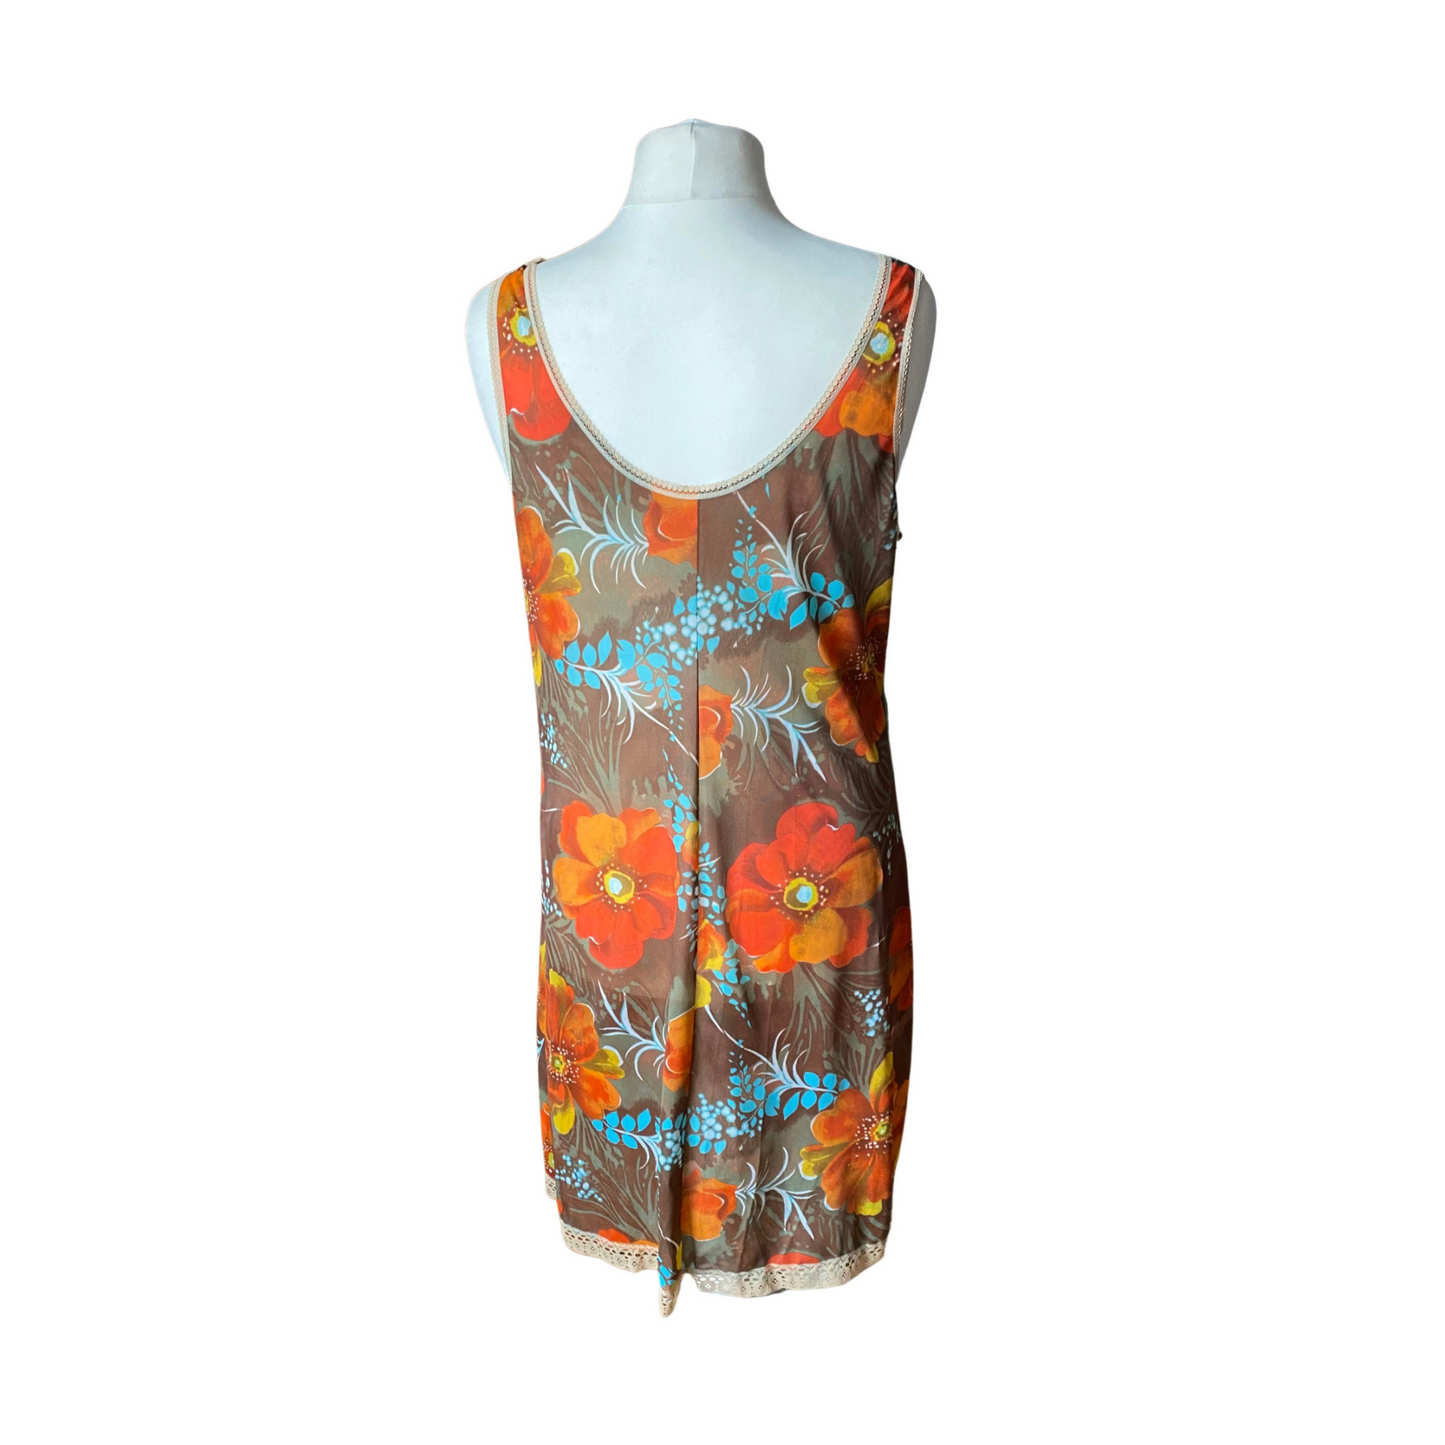 70s orange flower print, lace trimmed slip dress. Approx UK size 18-20